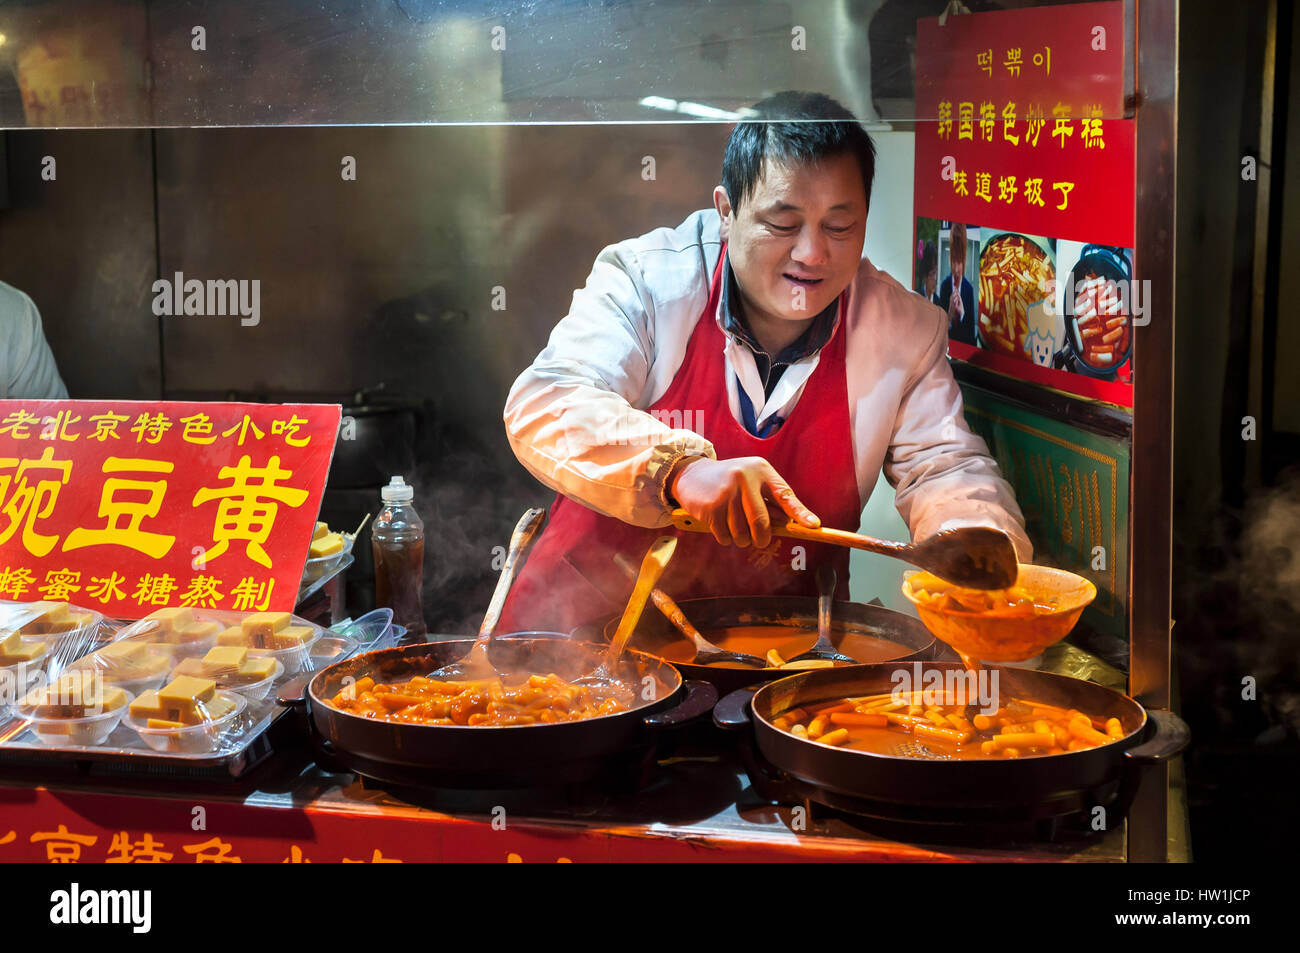 WANGFUJING NIGHT MARKET, BEIJING - DEC 25, 2013 - A vendor serves spicy Korean rice cakes at Wangfujing snack street, Beijing. Stock Photo